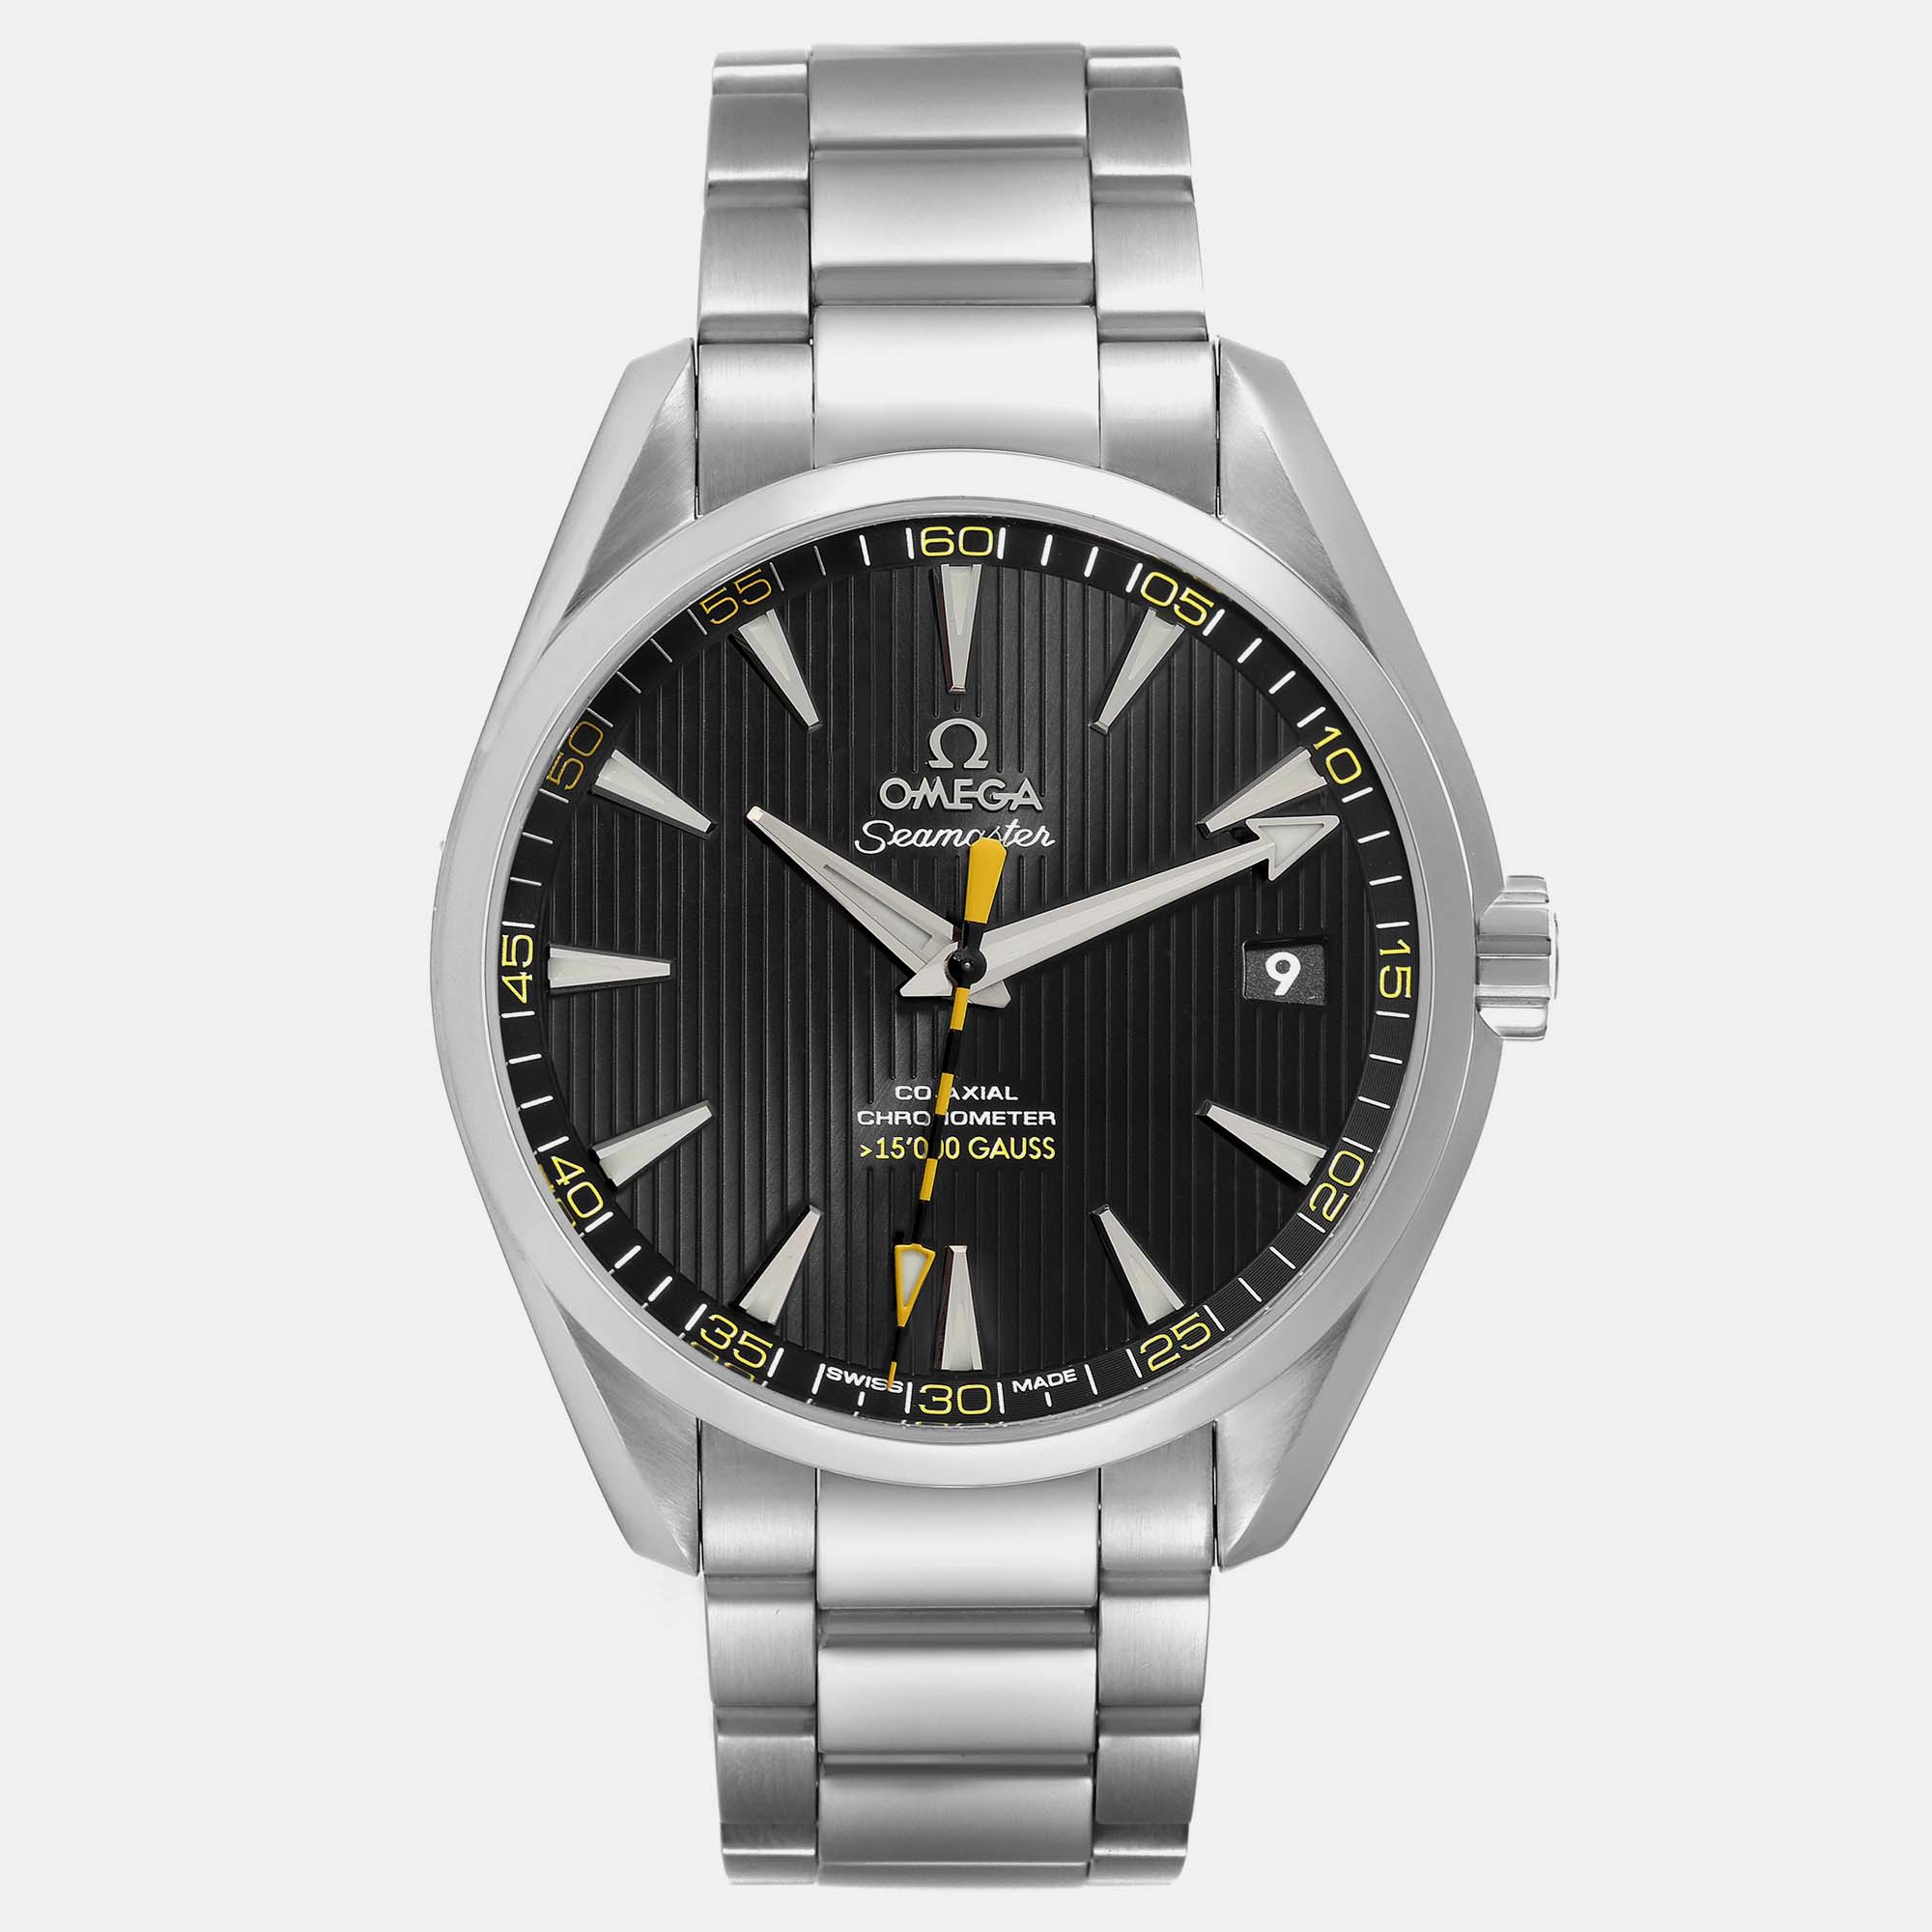 Omega black stainless steel seamaster aqua terra 231.10.42.21.01.002 automatic men's wristwatch 41.5 mm